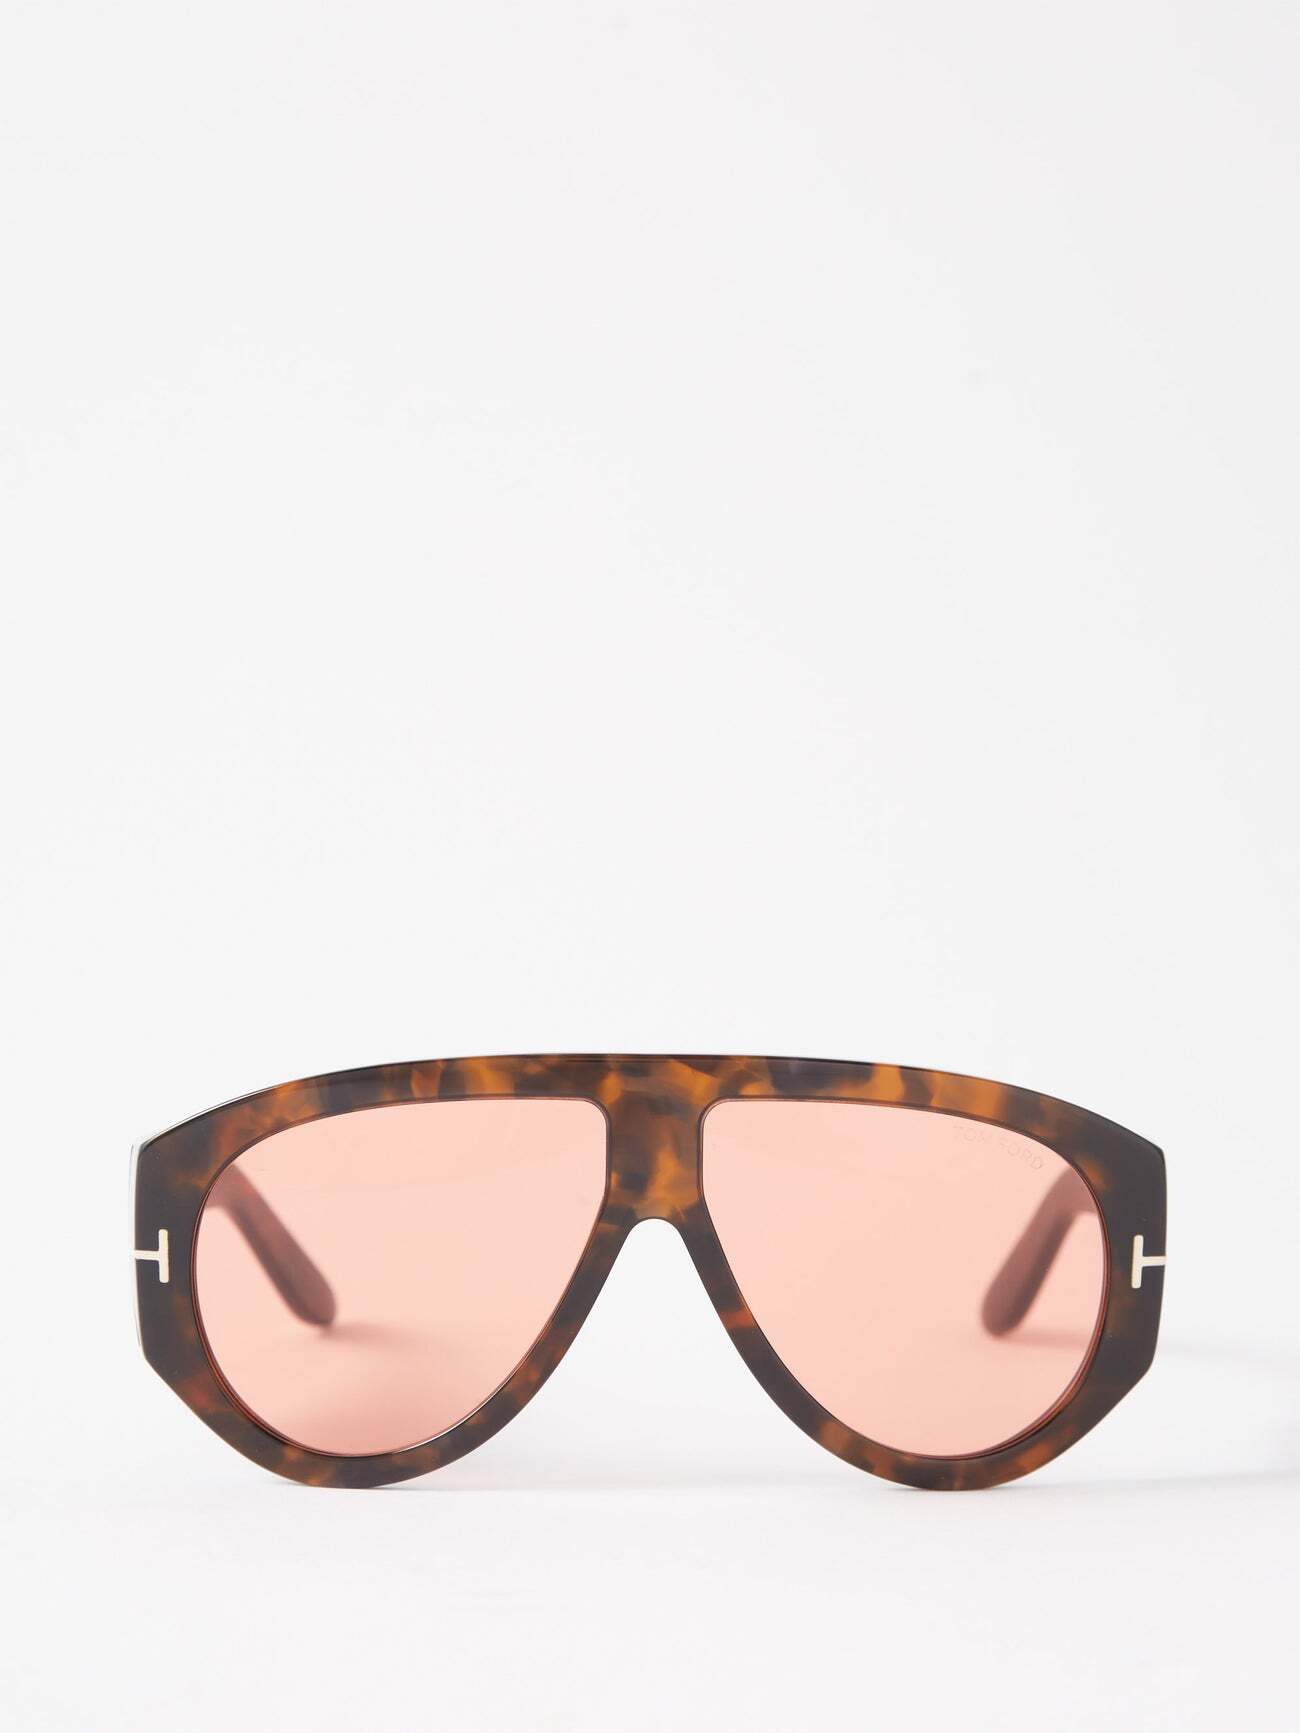 Tom Ford Eyewear - Bronson Aviator Acetate Sunglasses - Womens - Brown Multi